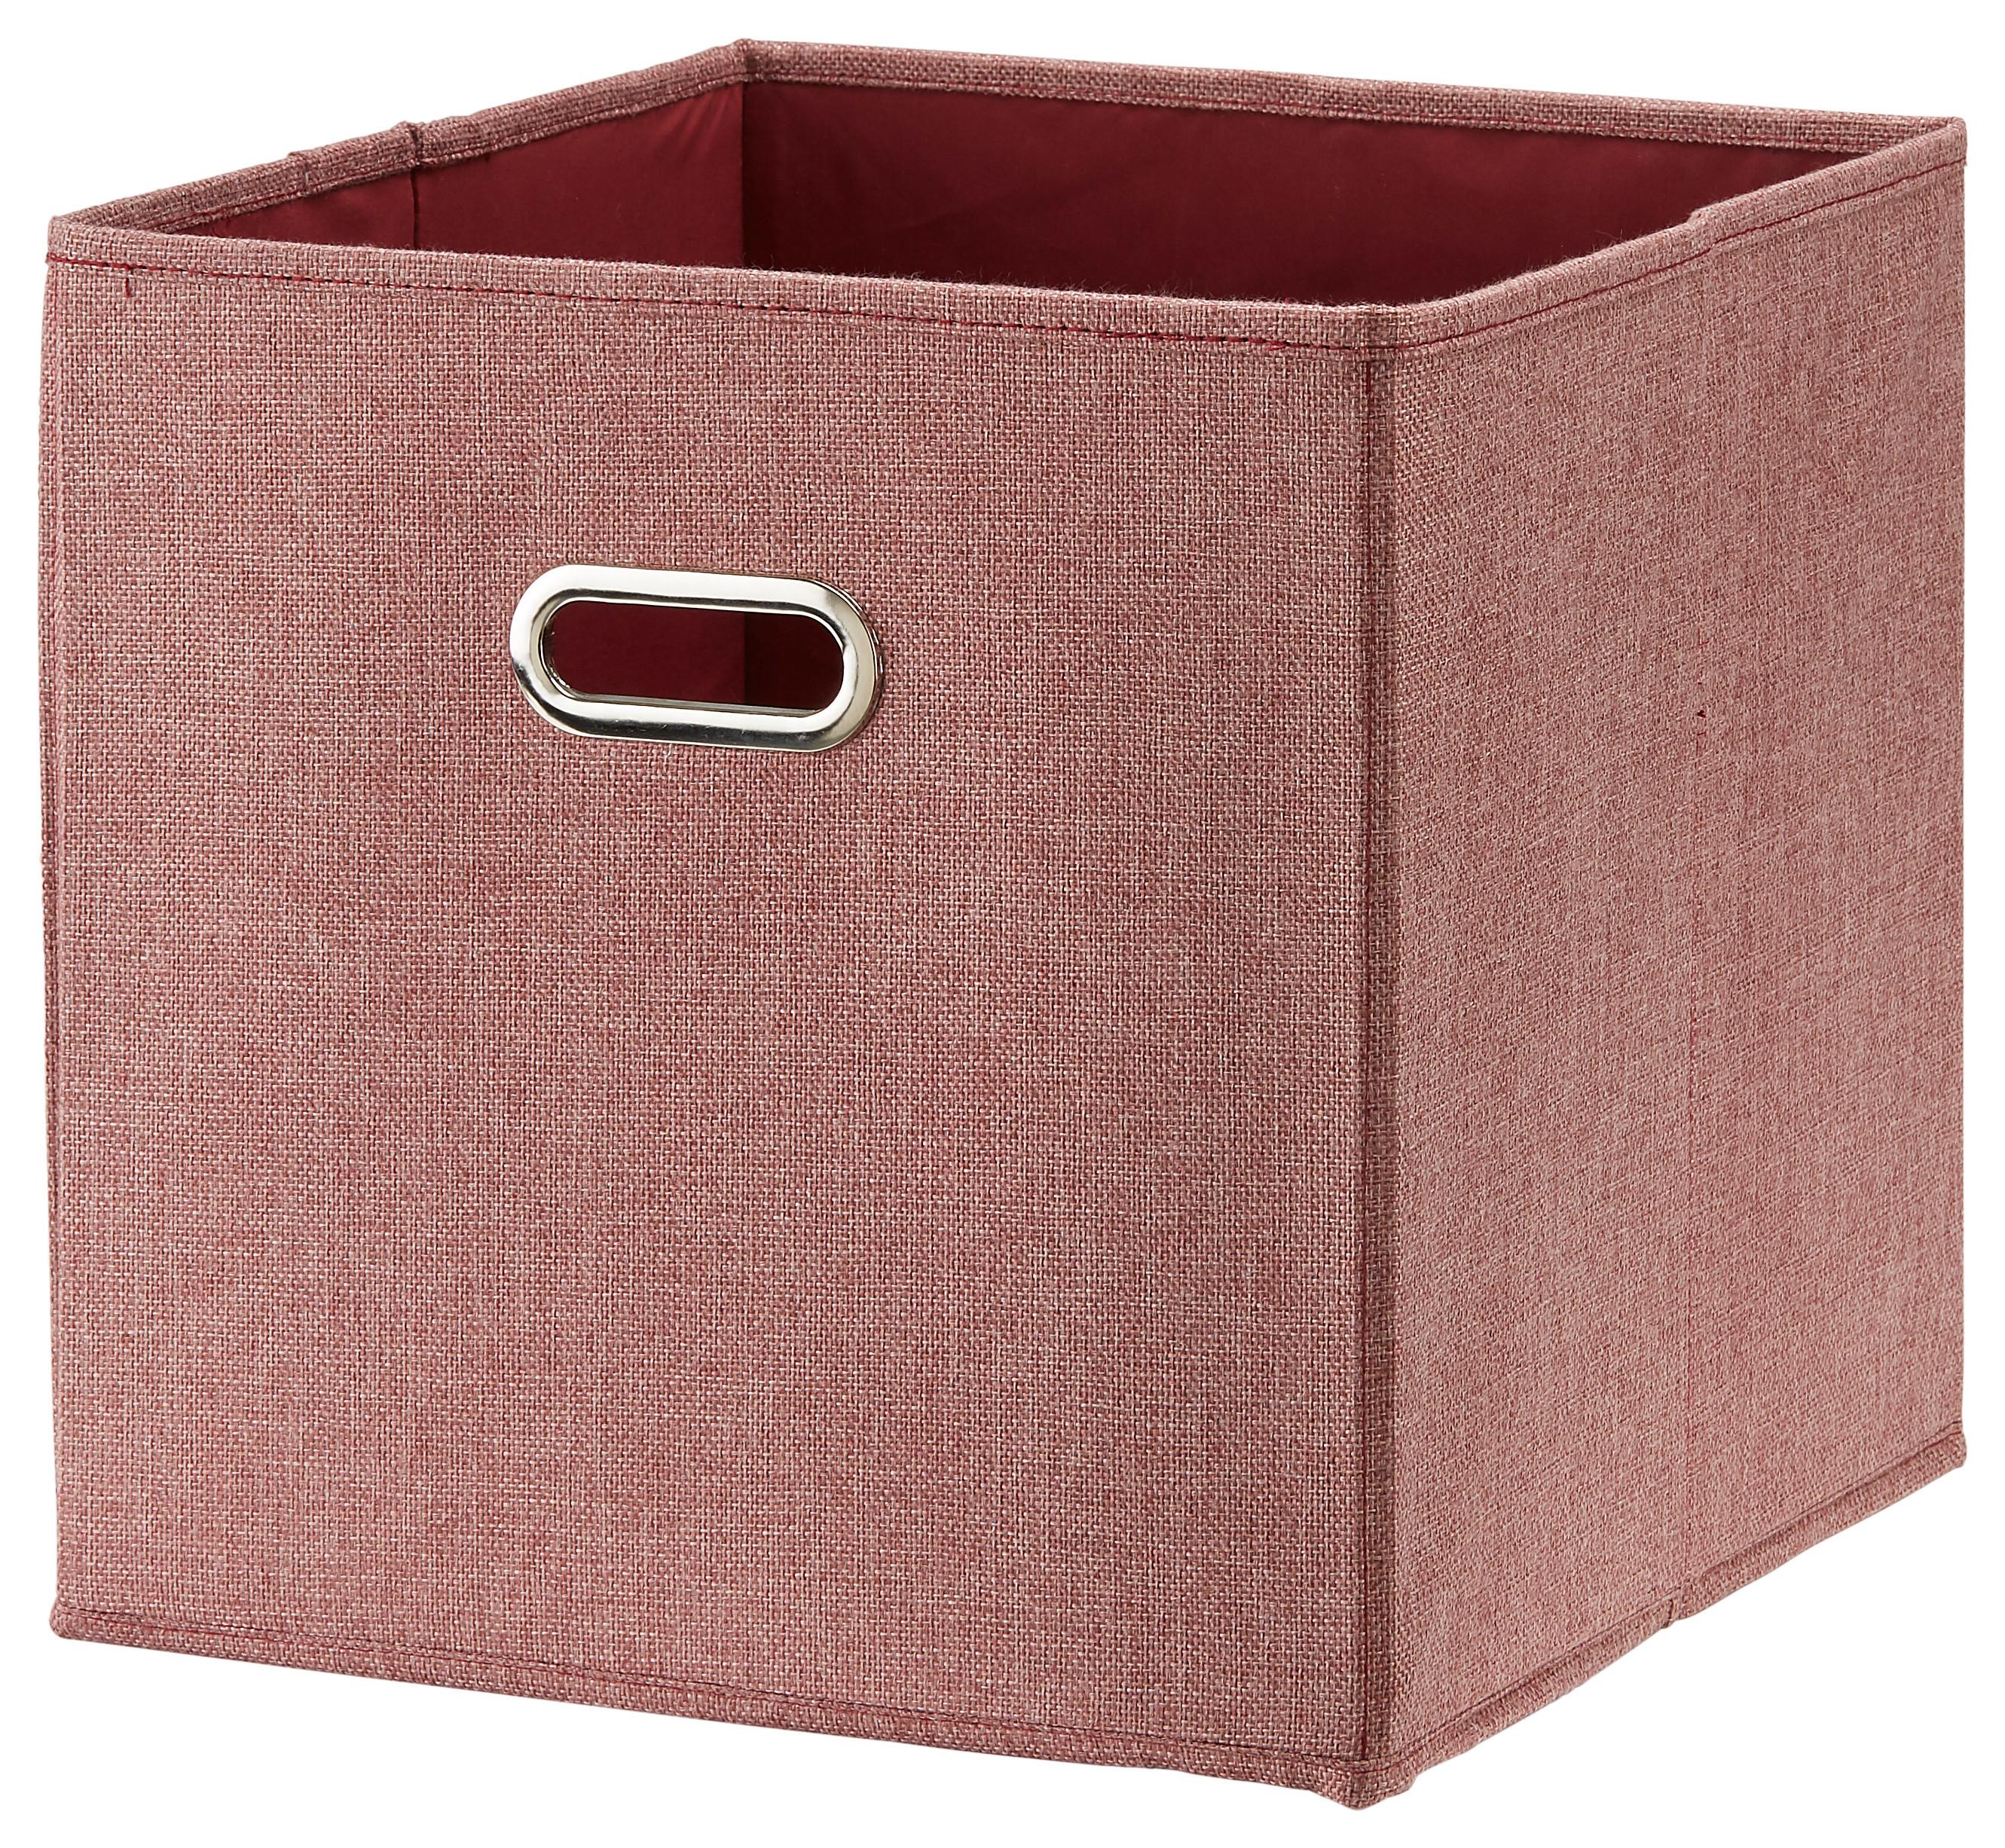 Faltbox Bobby ca. 34l - Rotbraun, MODERN, Karton/Textil (33/32/33cm) - Premium Living